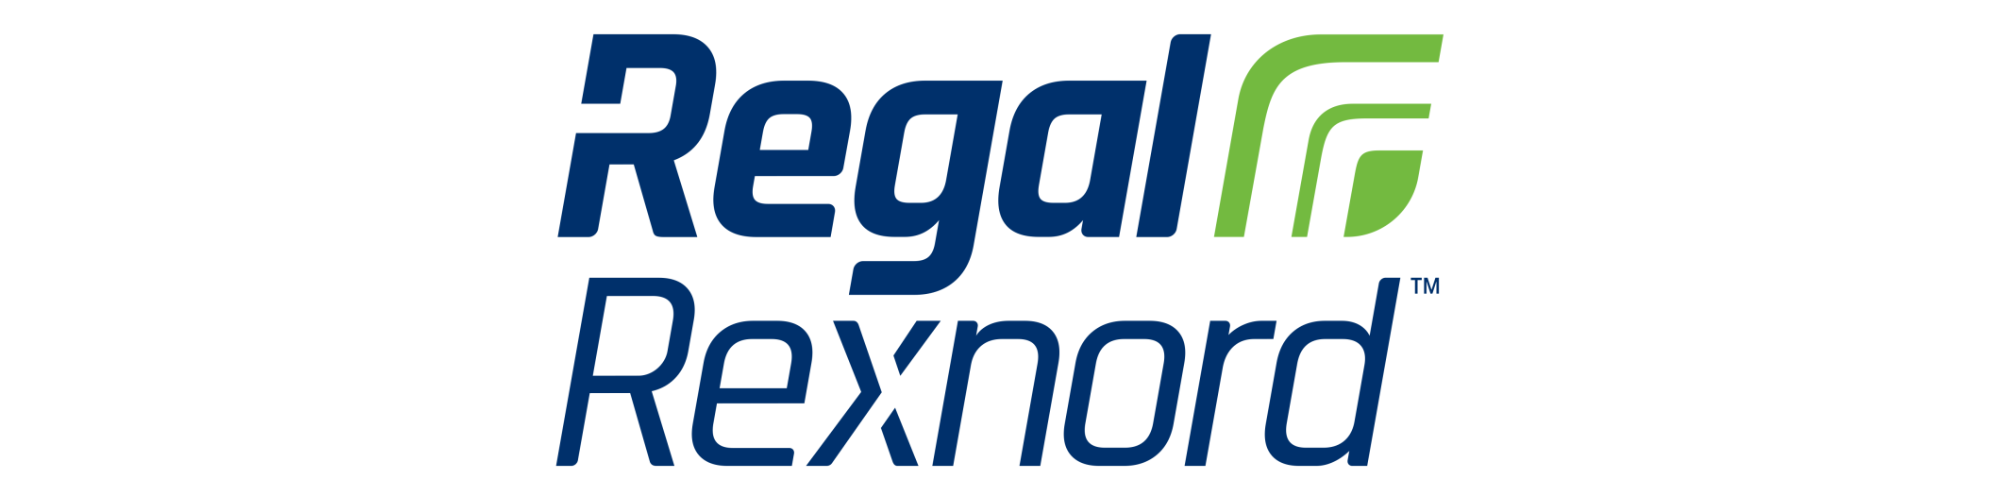 Regal Rexnord Corporation logo